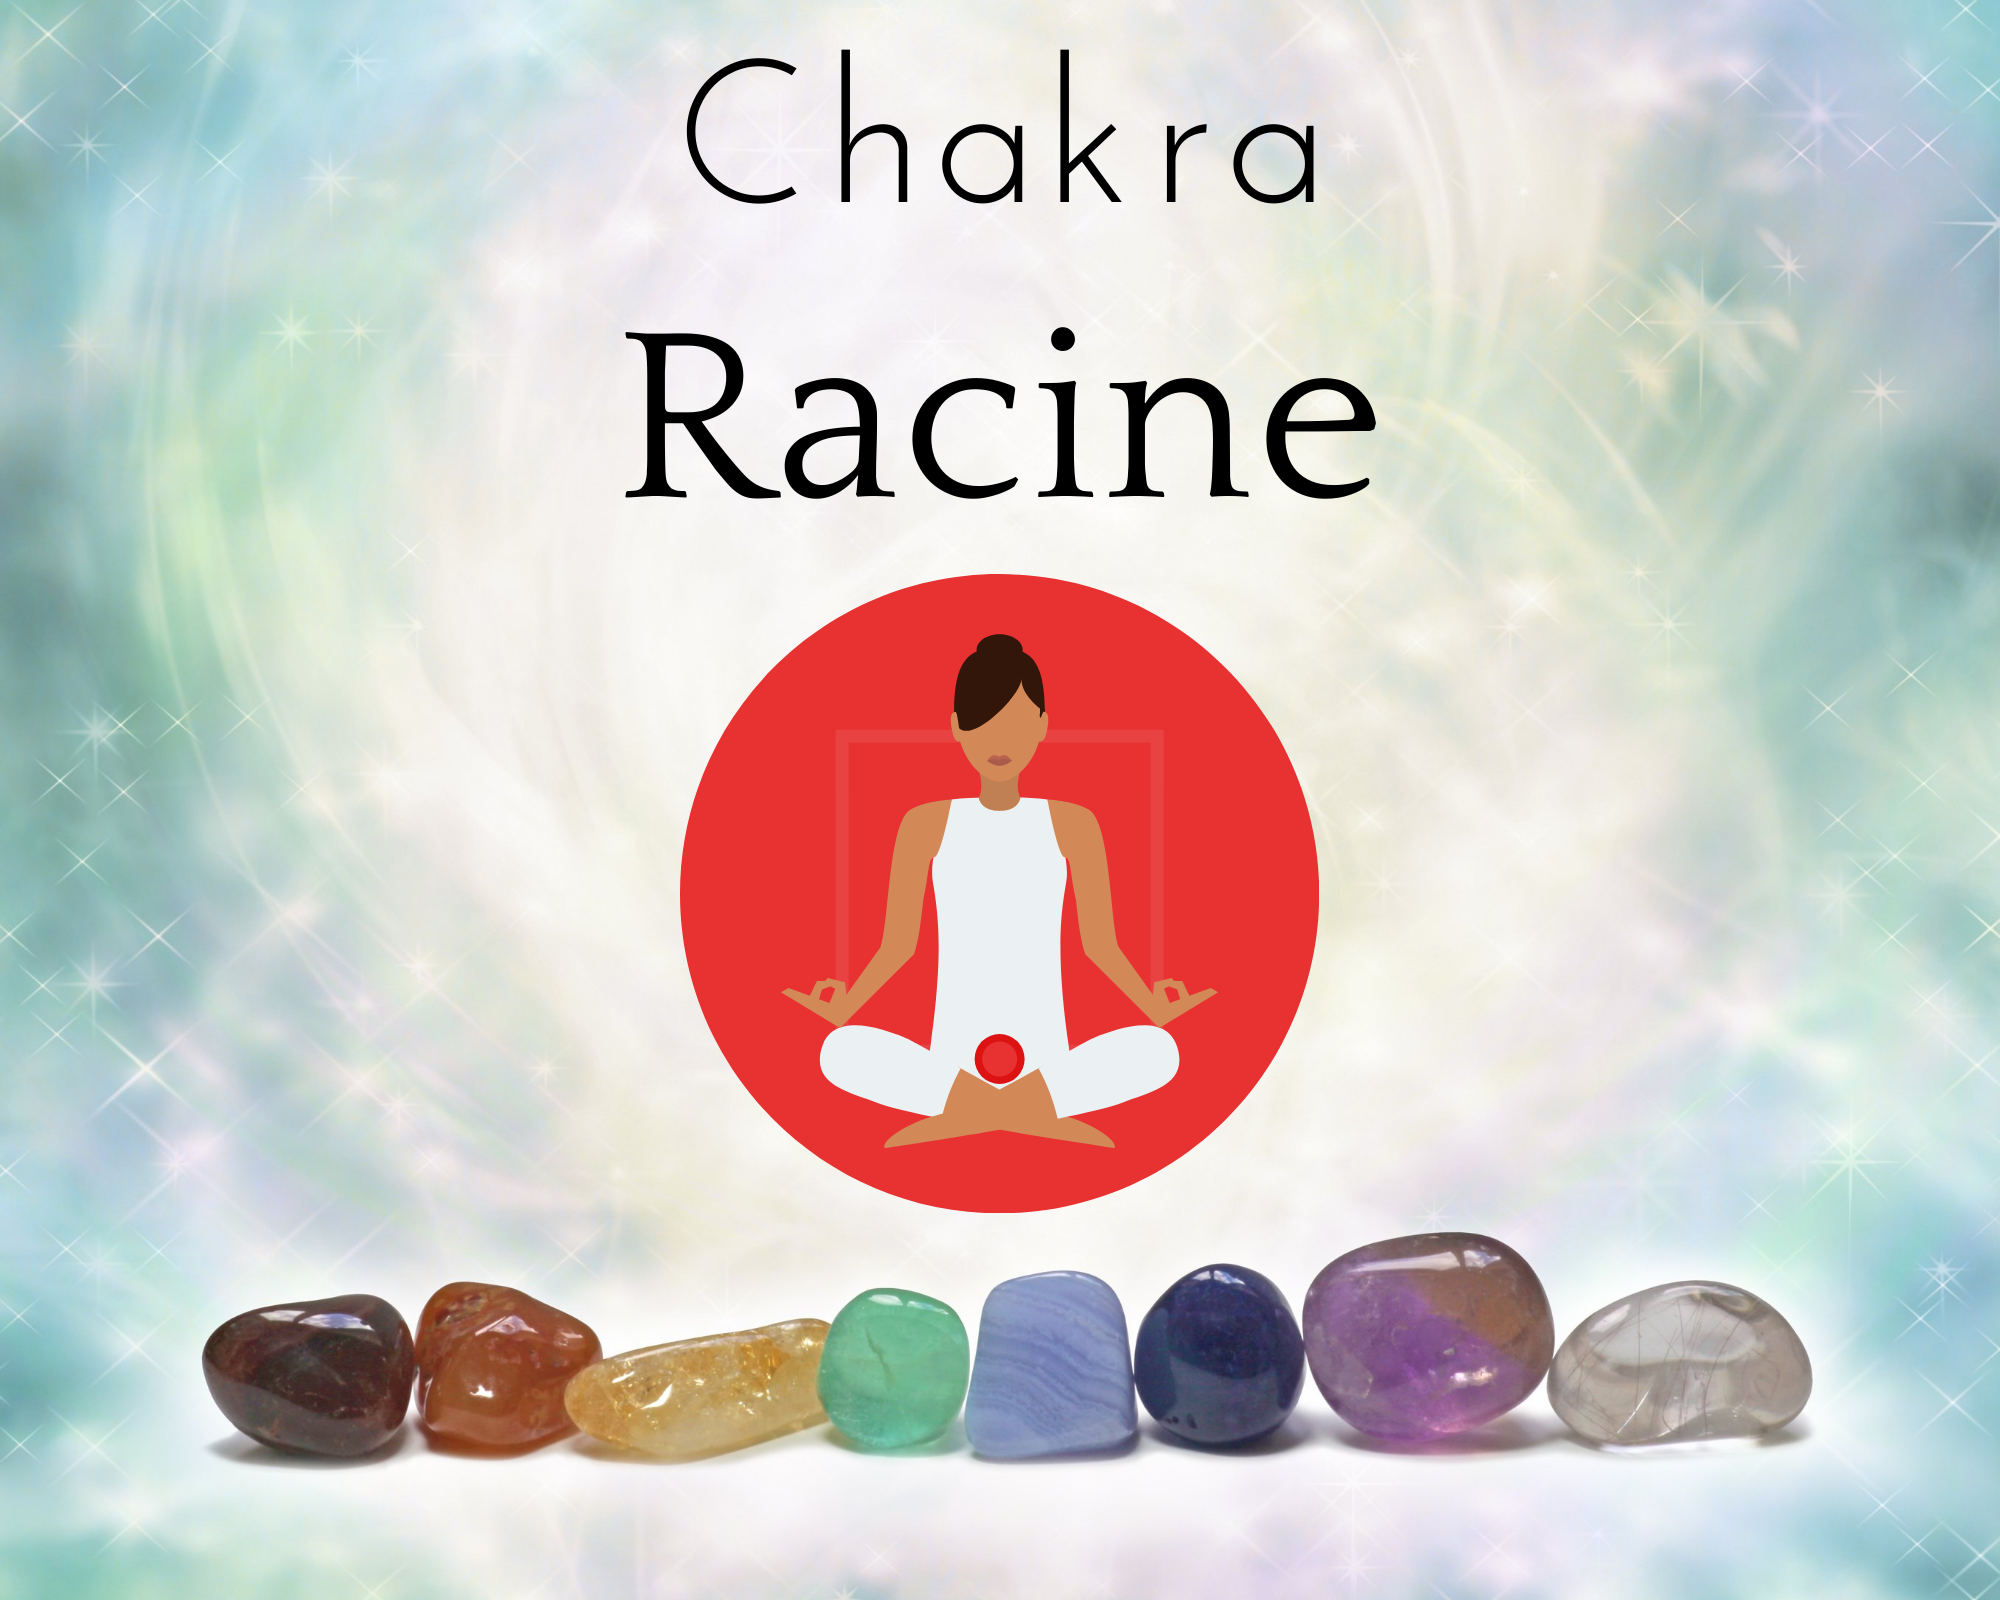 Le chakra racine ou Muladhara : Premier des  sept chakras